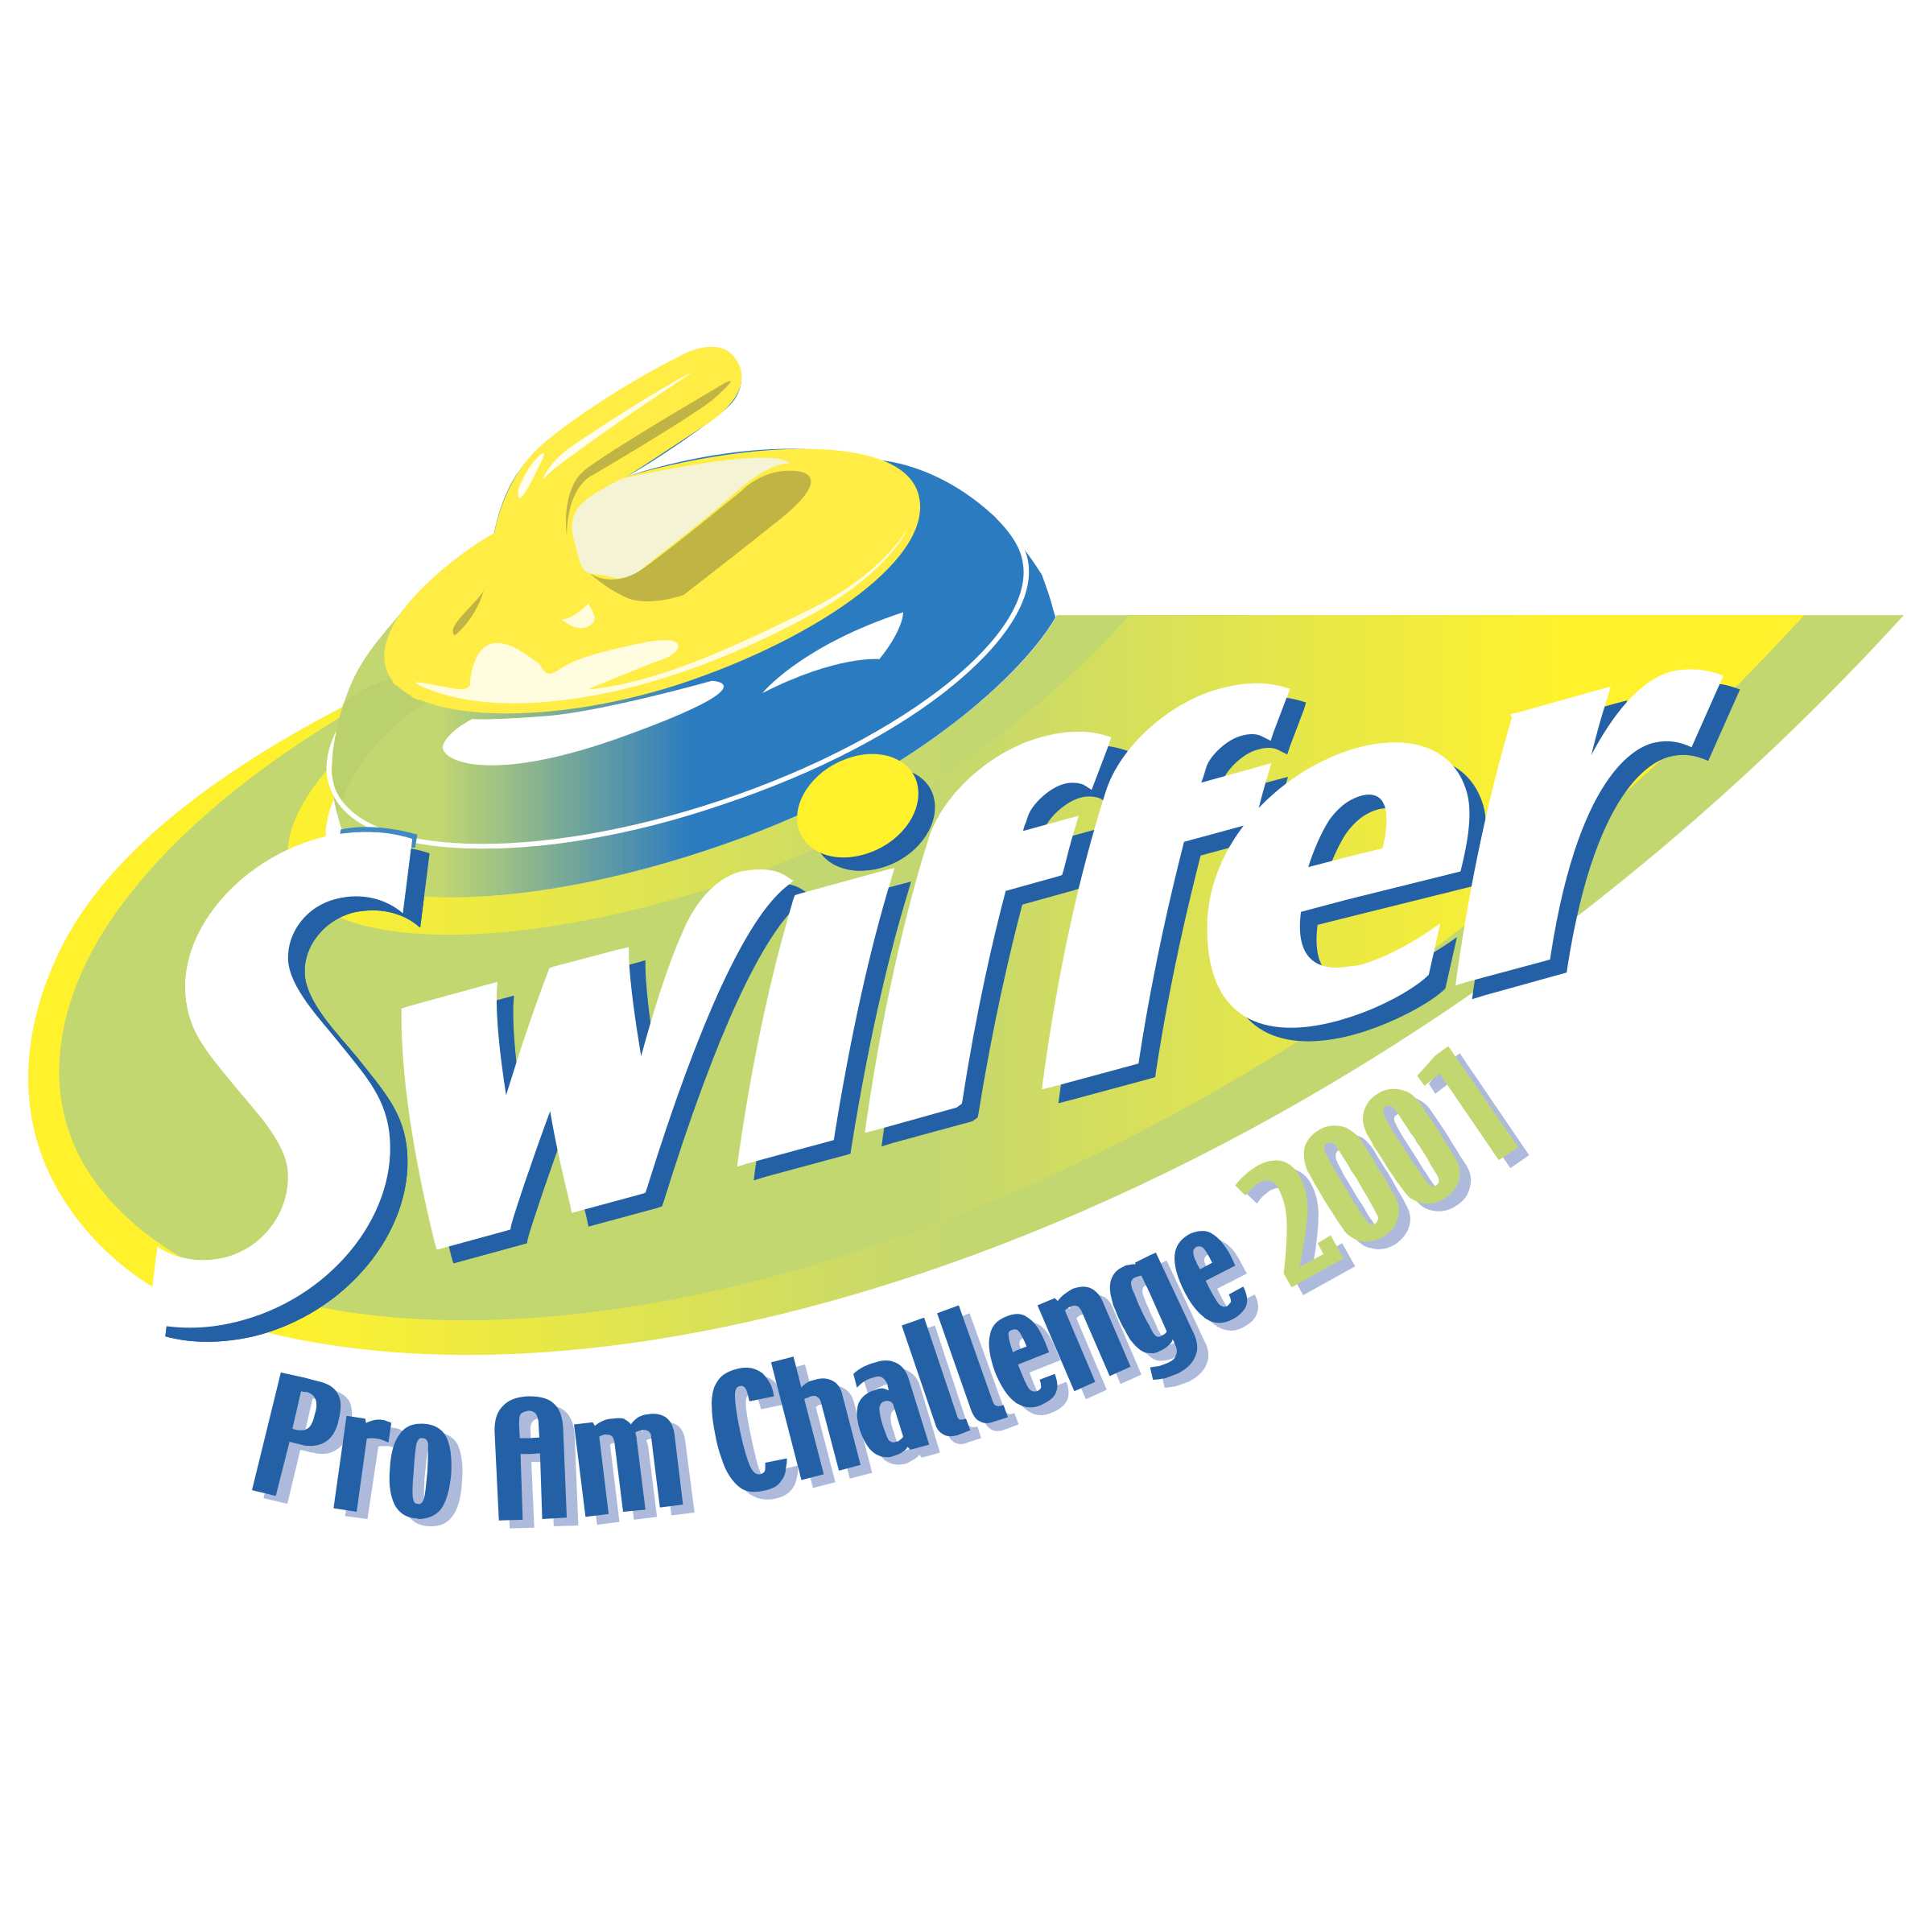 Swiffer Logo - Swiffer Logo PNG Transparent & SVG Vector